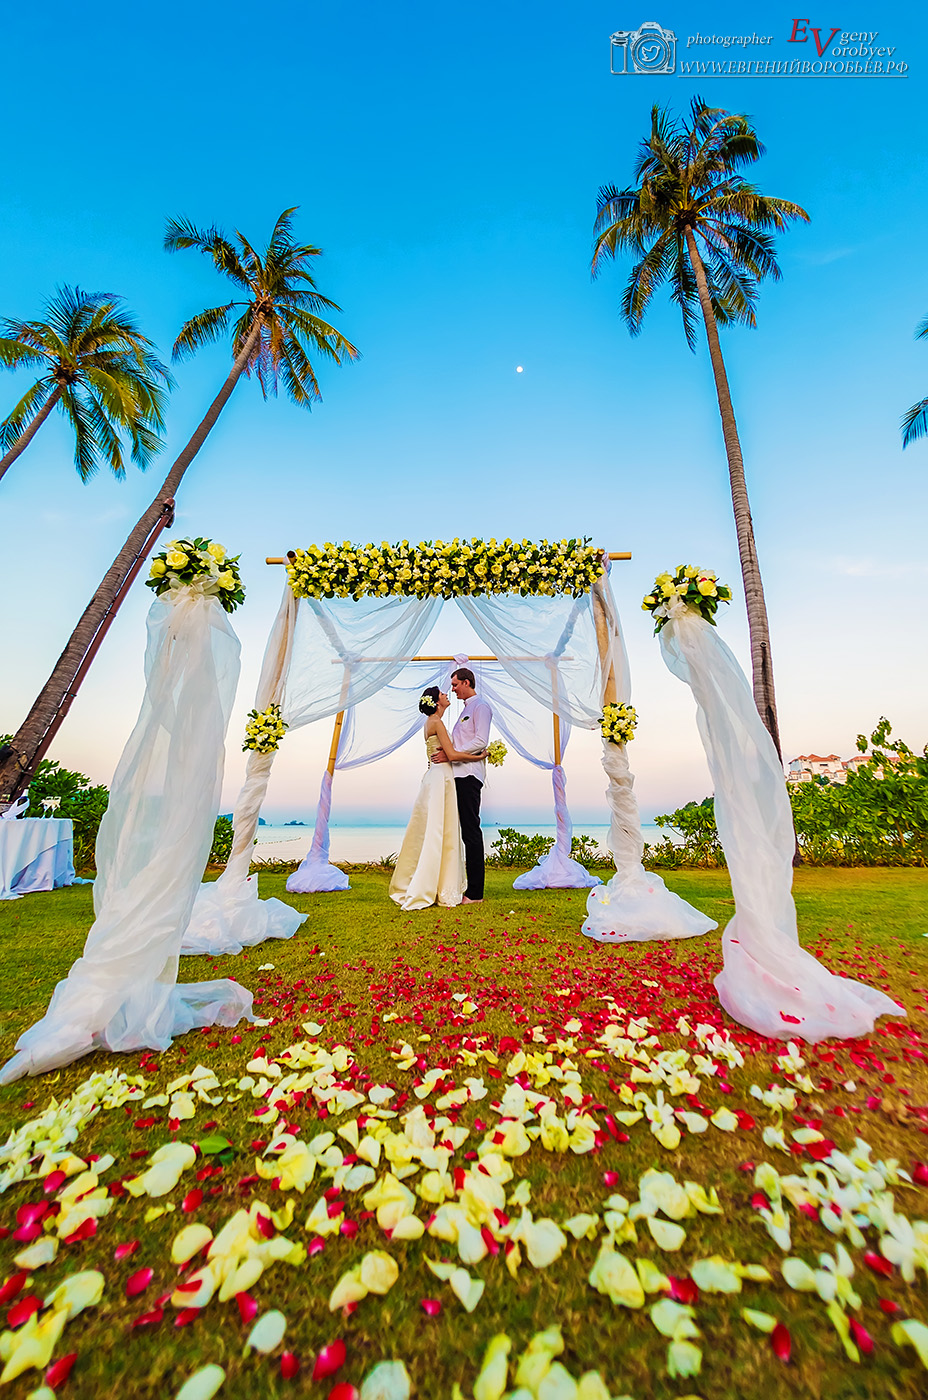 свадебная фотосессия на Пхукете Phuket Таиланд свадьба церемония на пляже арка жених невеста любовь 